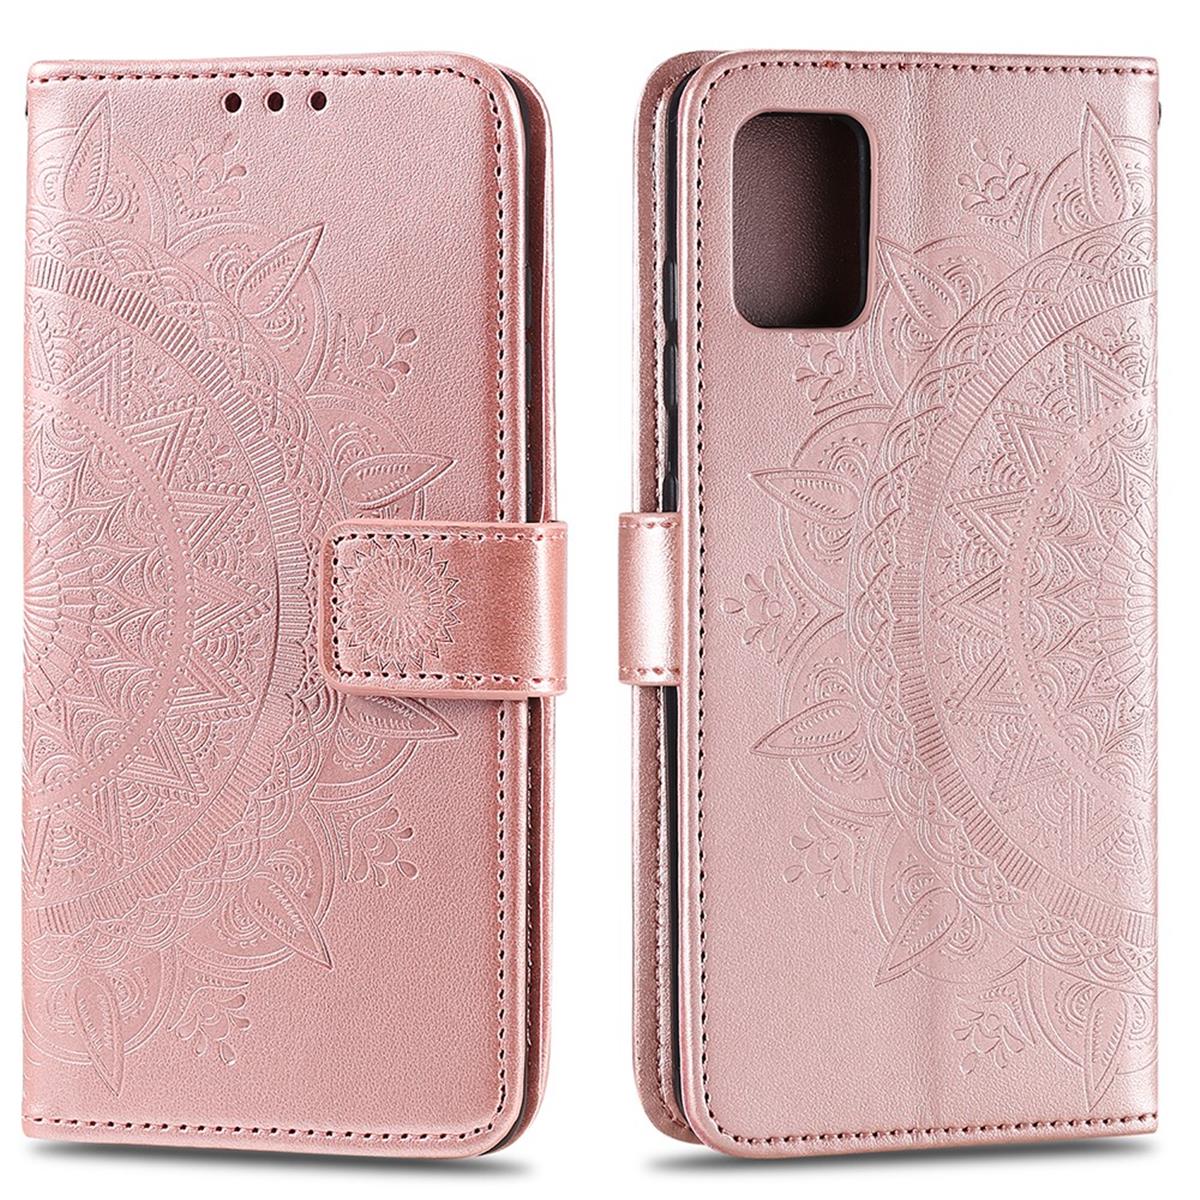 Hülle für Samsung Galaxy A51 Handyhülle Flip Case Schutzhülle Cover Mandala Rose